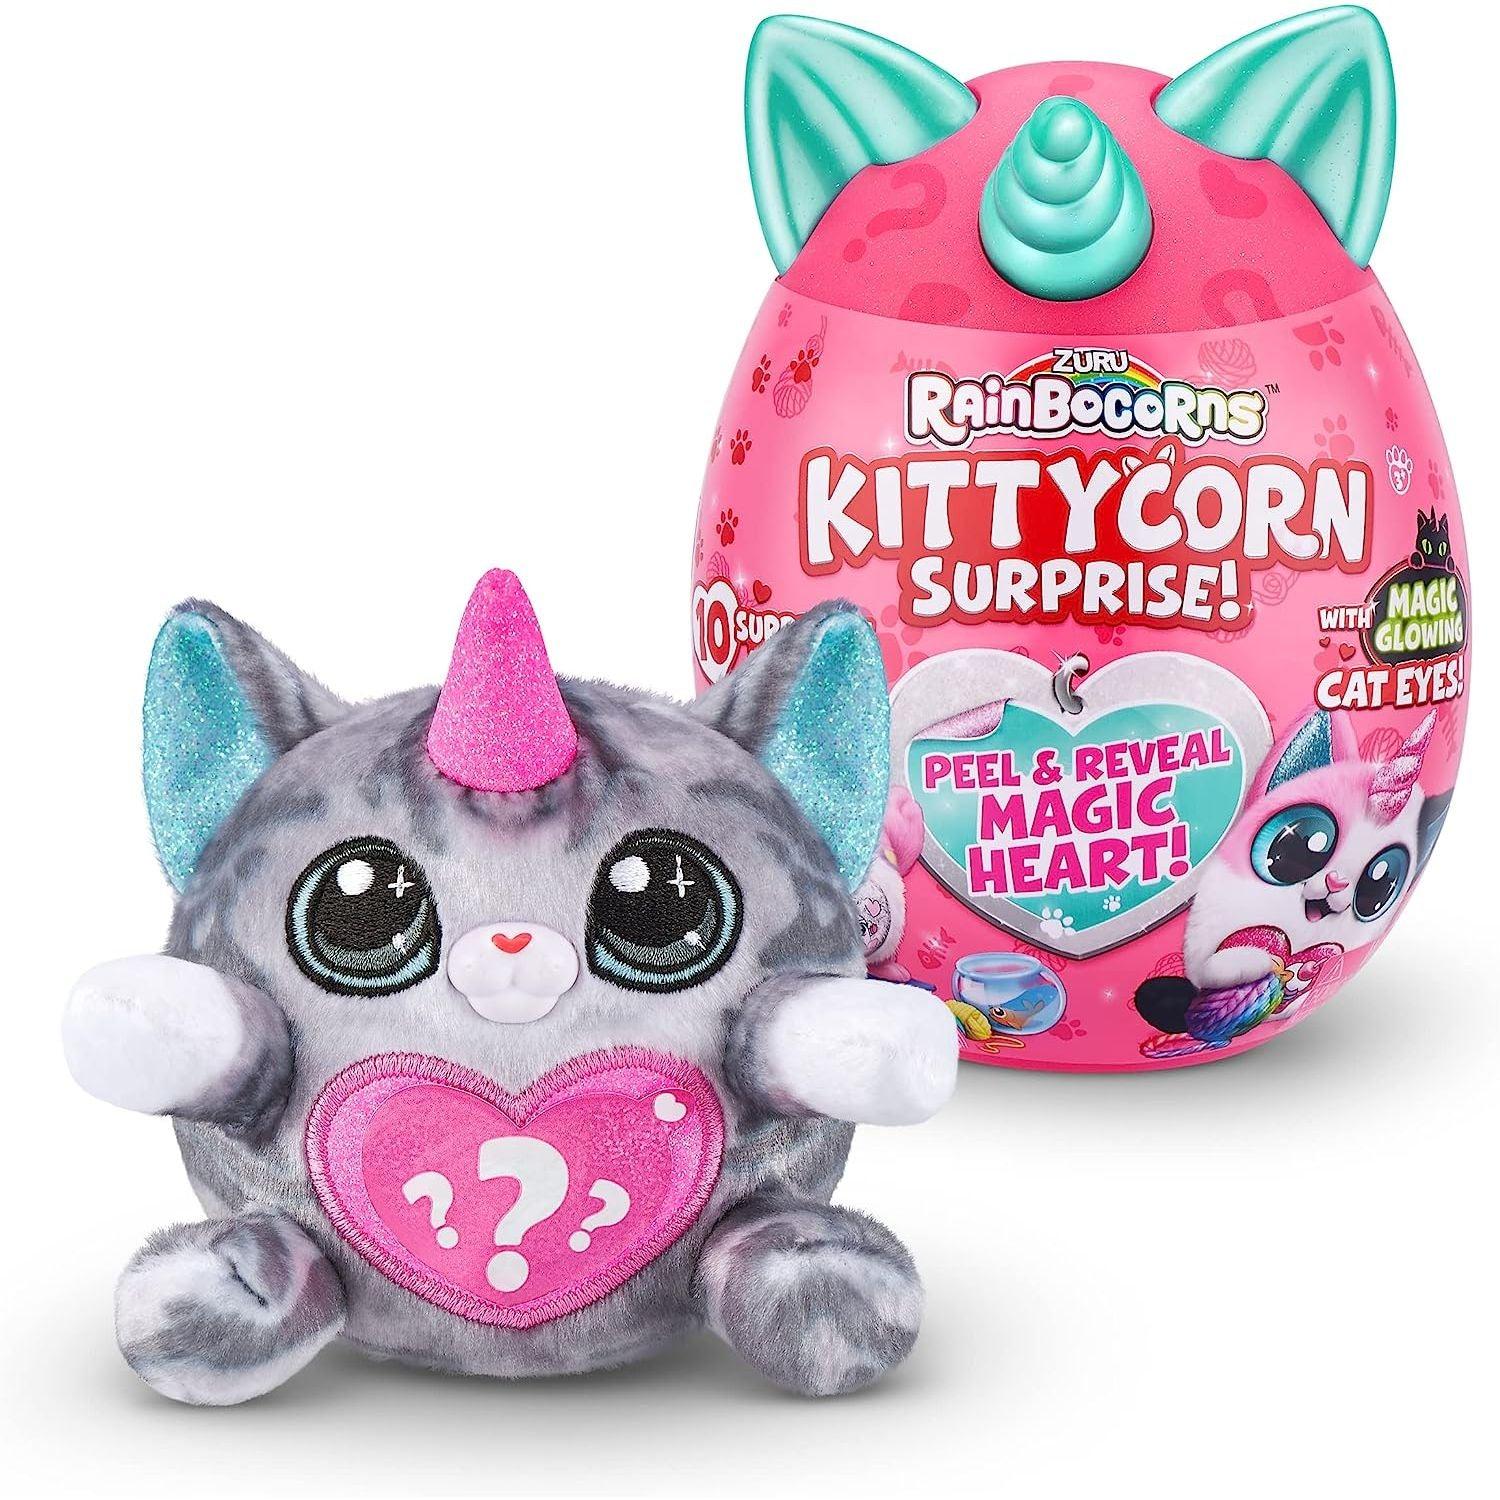 Rainbocorns Kittycorn Surprise Series 1 (American Shorthair) Collectible Plush Stuffed Animal, Surprise Egg, Sticker Pack, Jelly Slime Poop 9259B